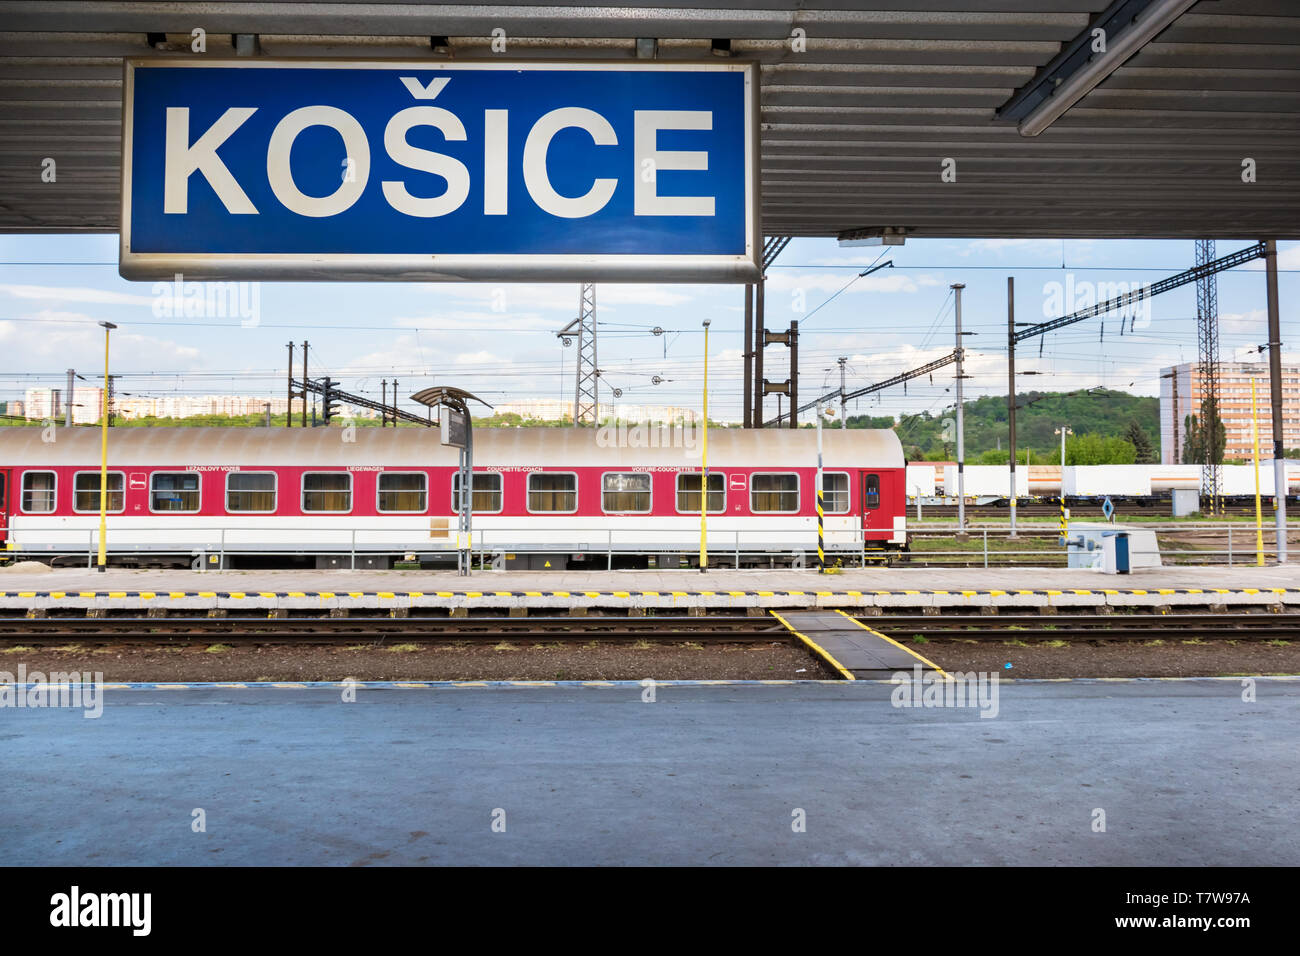 Couchette coach at Main railway station in Kosice (Slovakia) Stock Photo